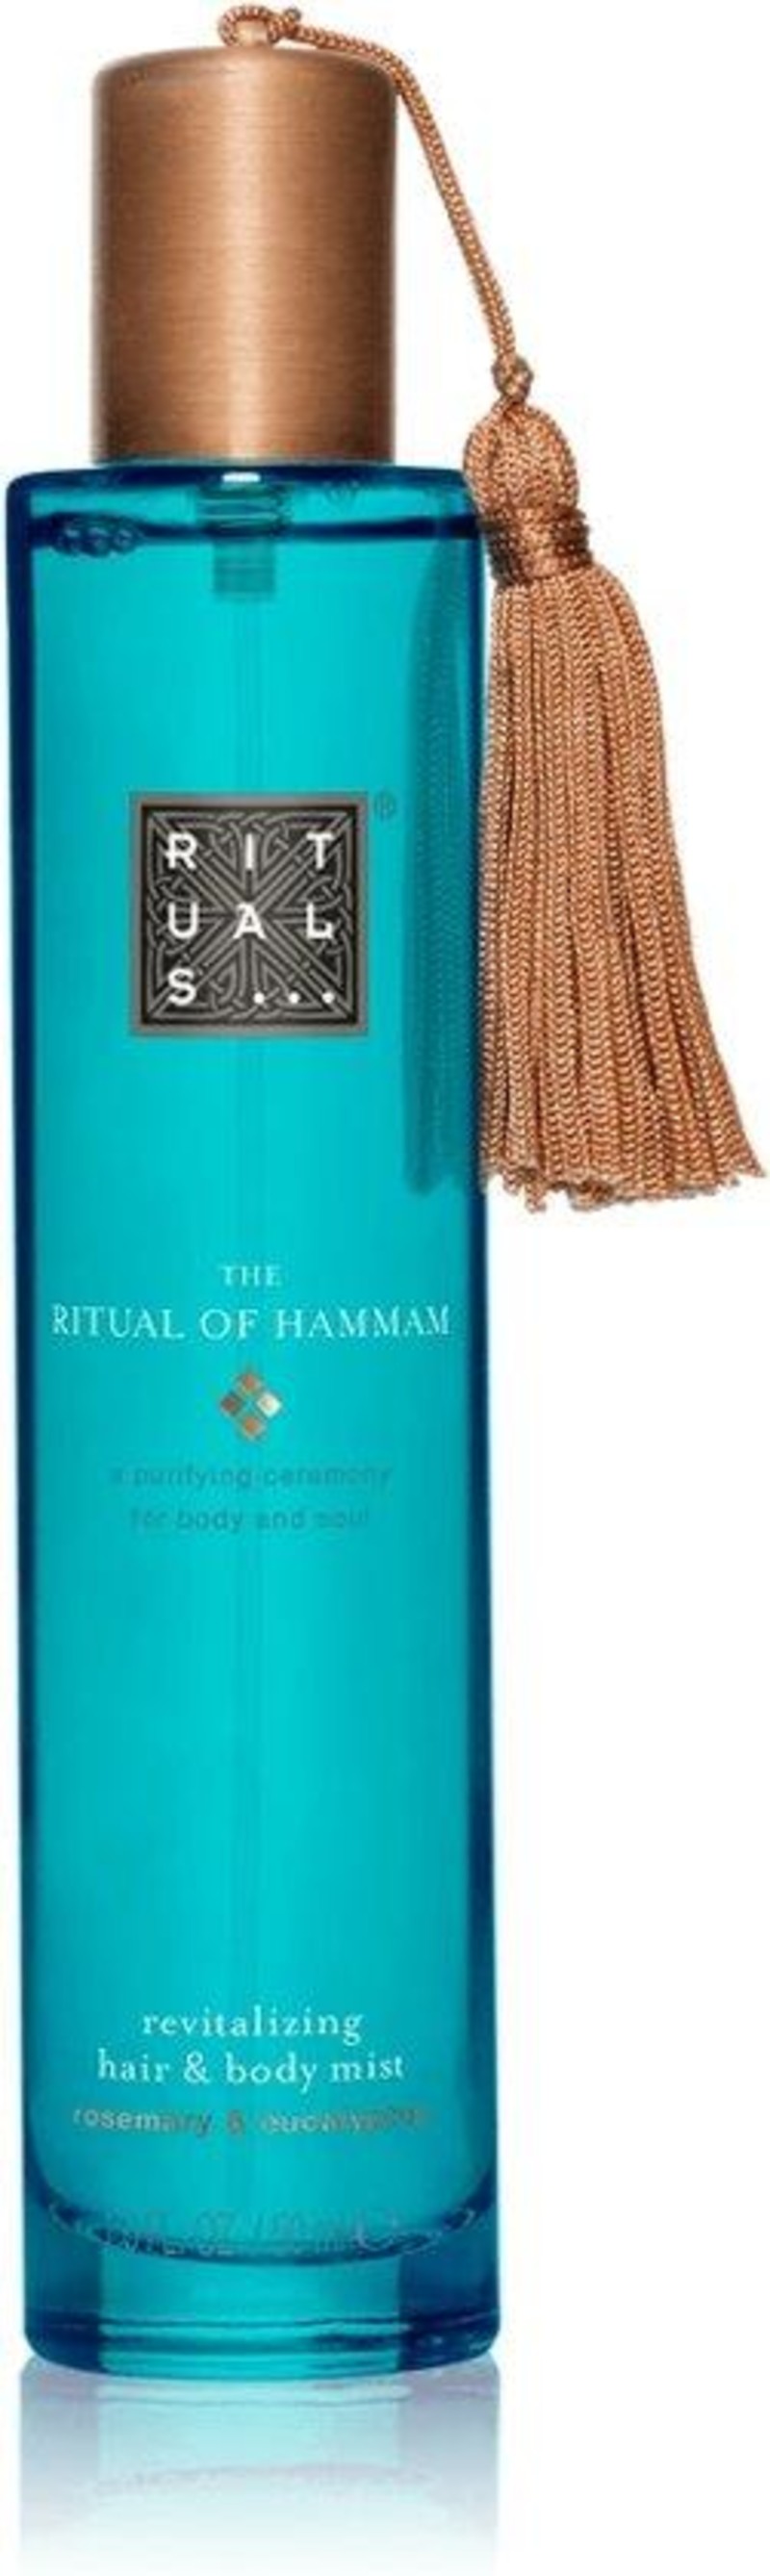 Rituals - The Ritual of Karma Hair & Body Mist 50 ml